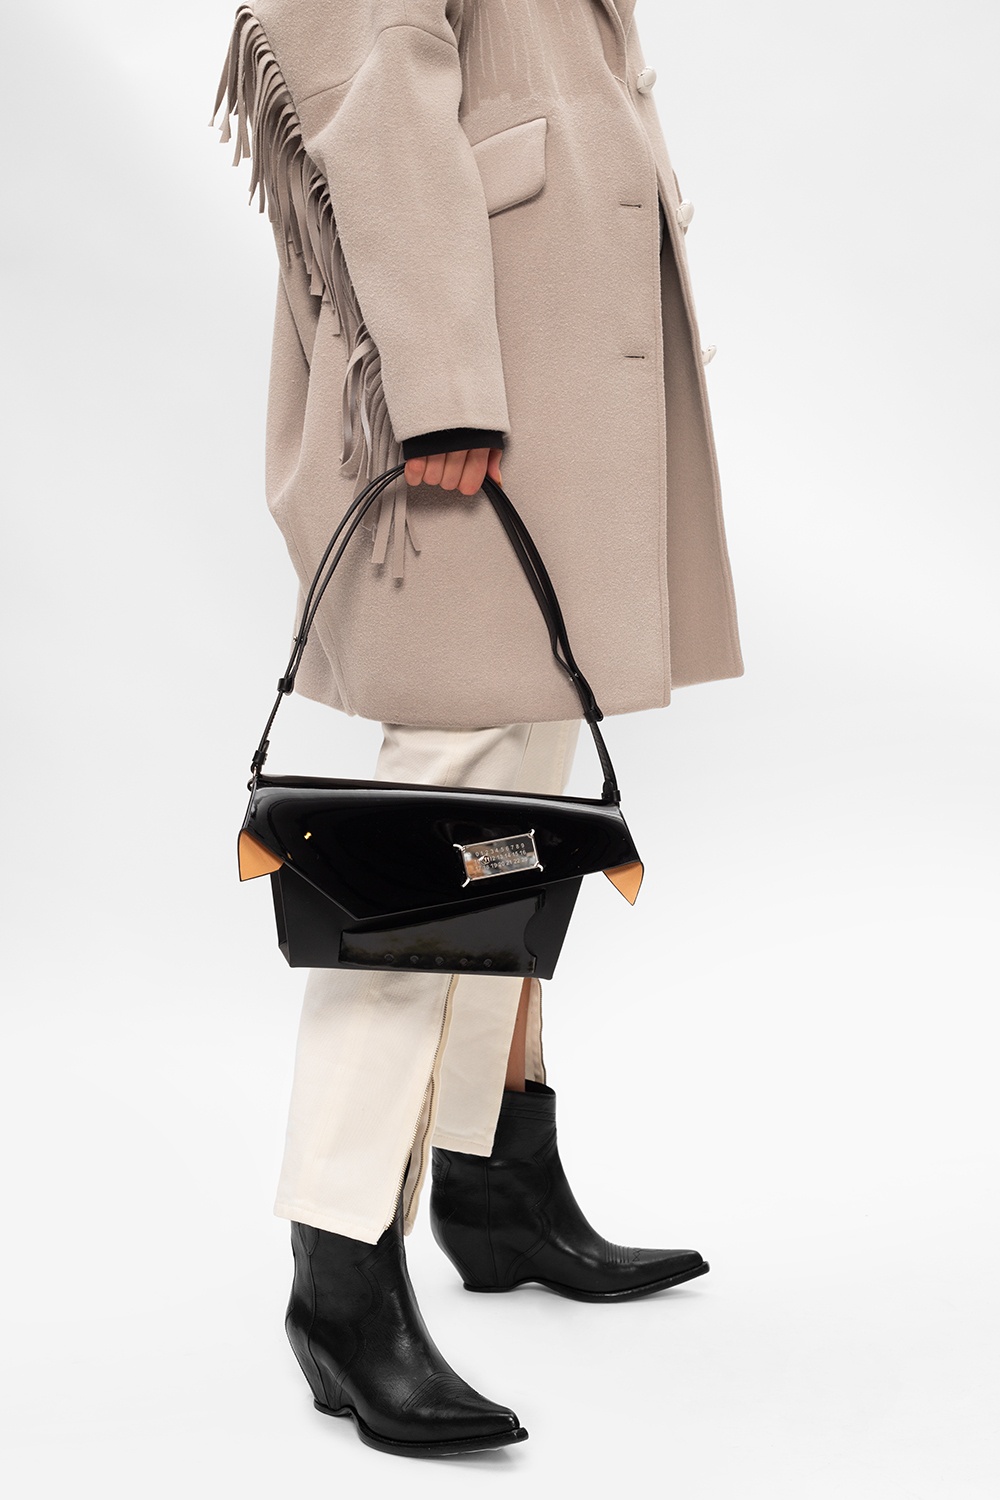 Chanel Le Marais Ligne Flap Bag Quilted Coated Canvas Medium